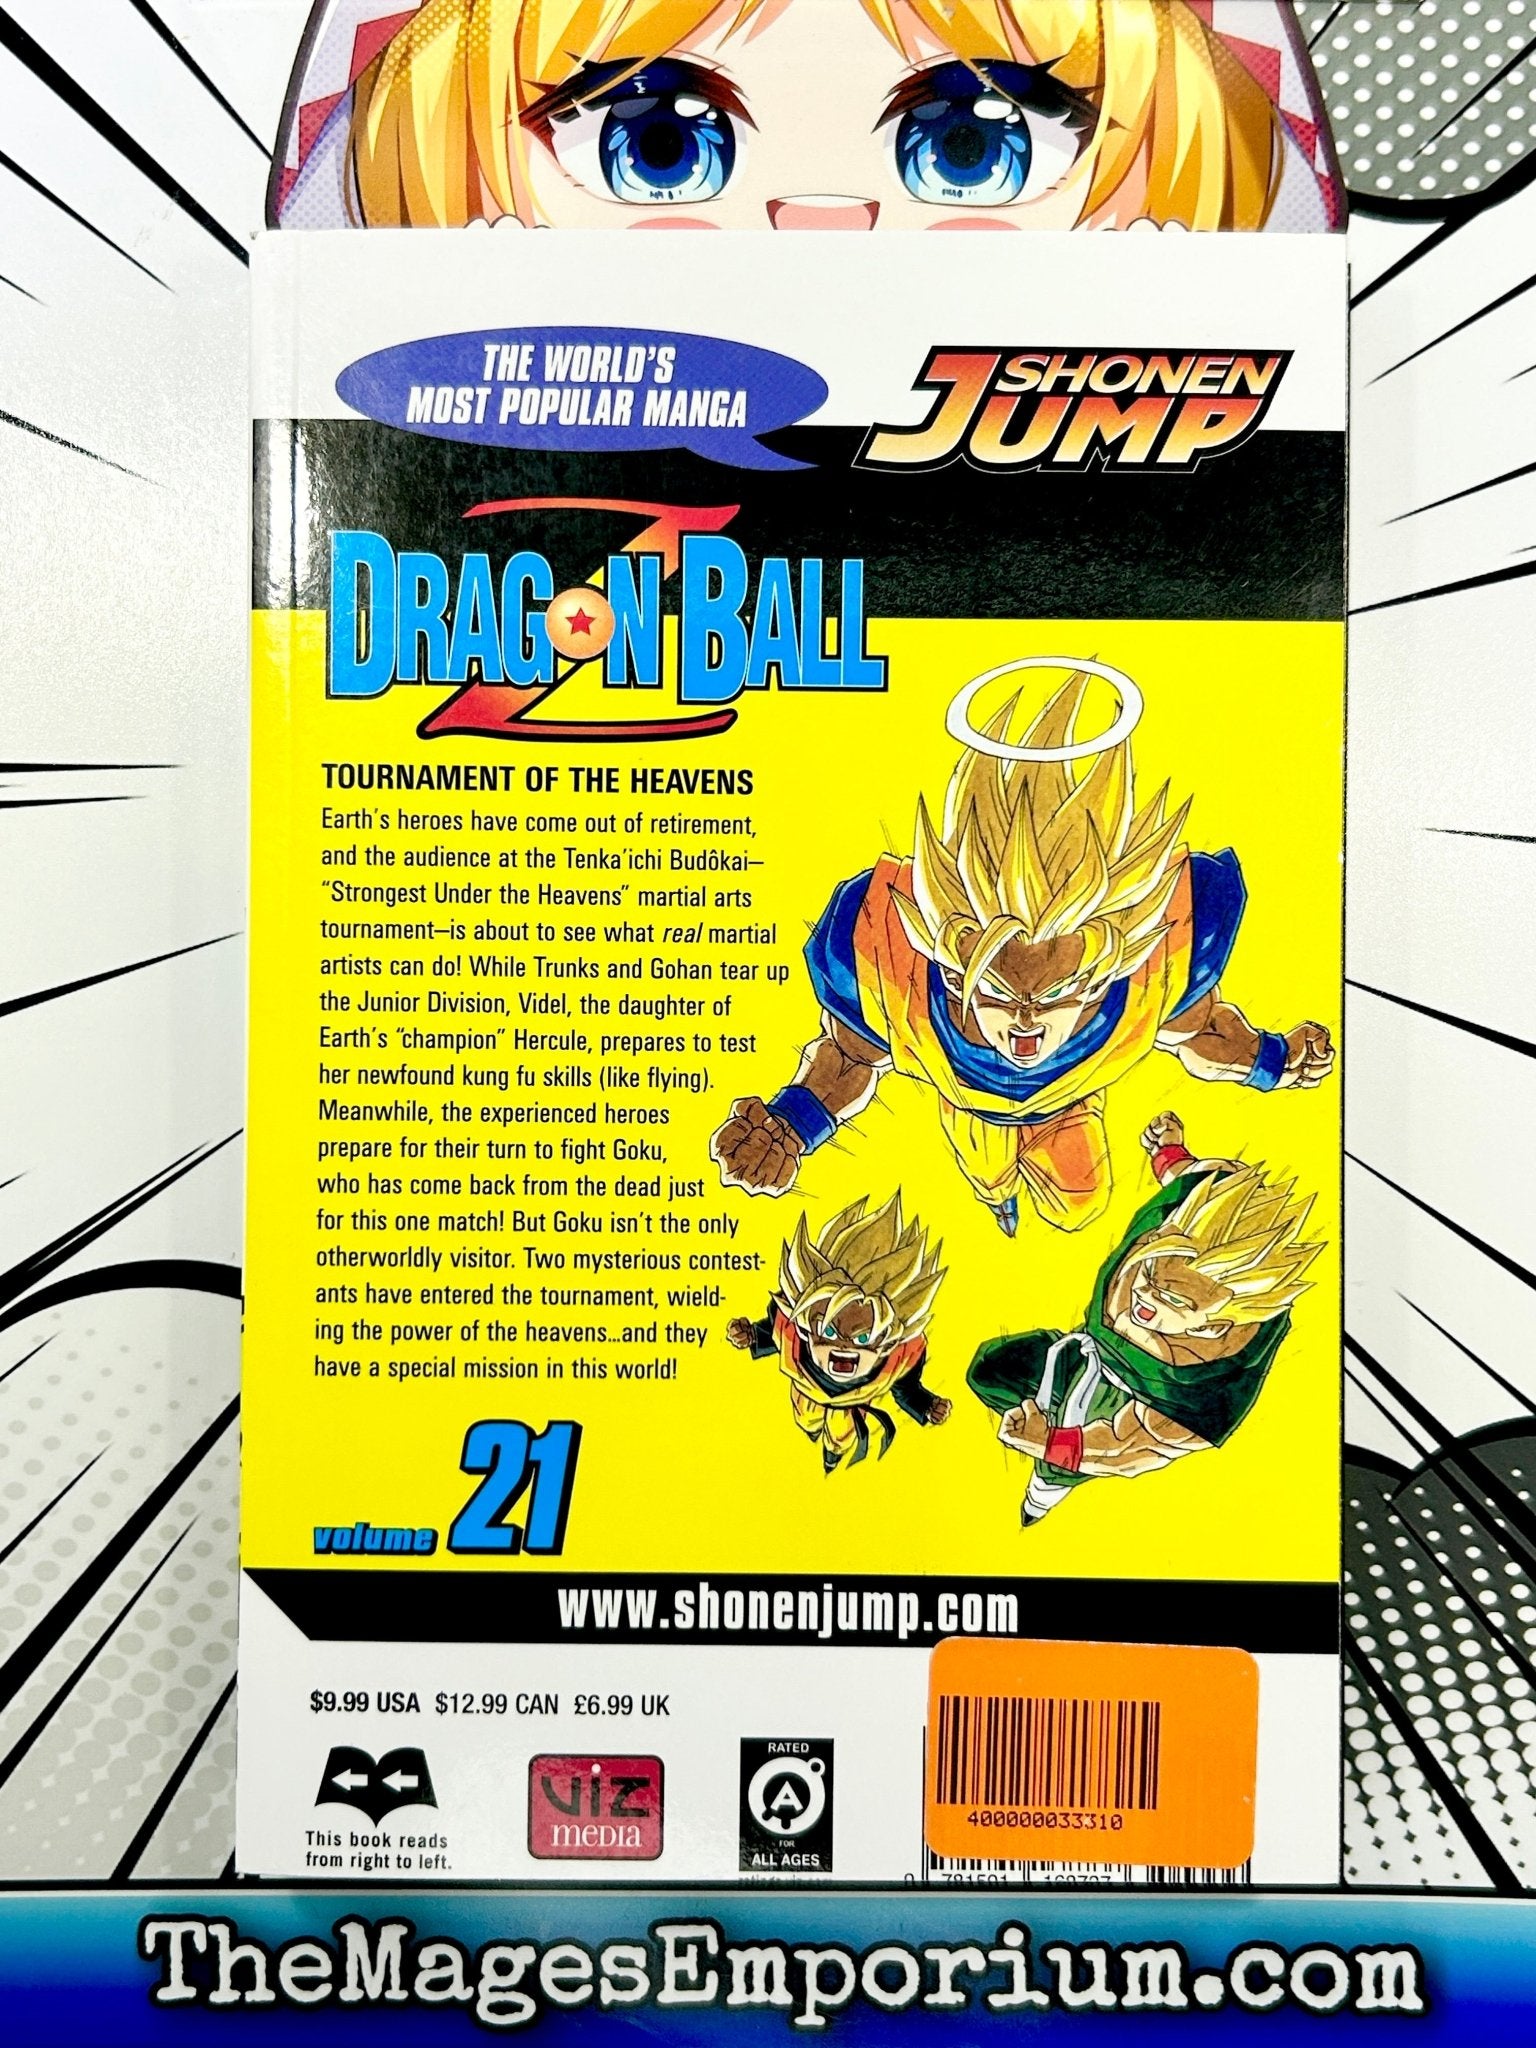 Dragon Ball Super Vol. 21, manga dragon ball super